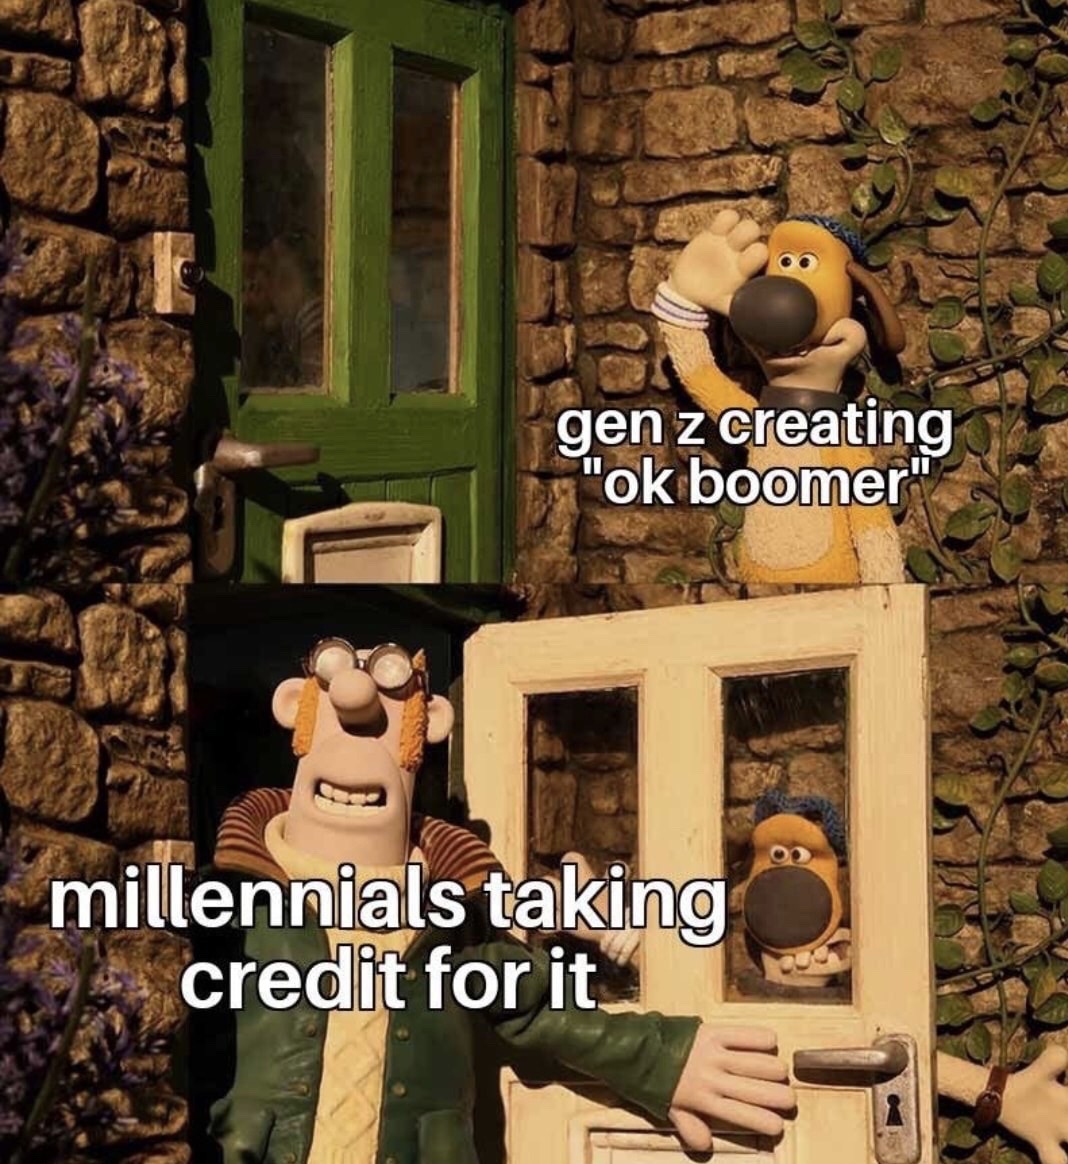 shaun the sheep door meme - gen z creating "ok boomer" millennials taking credit for it